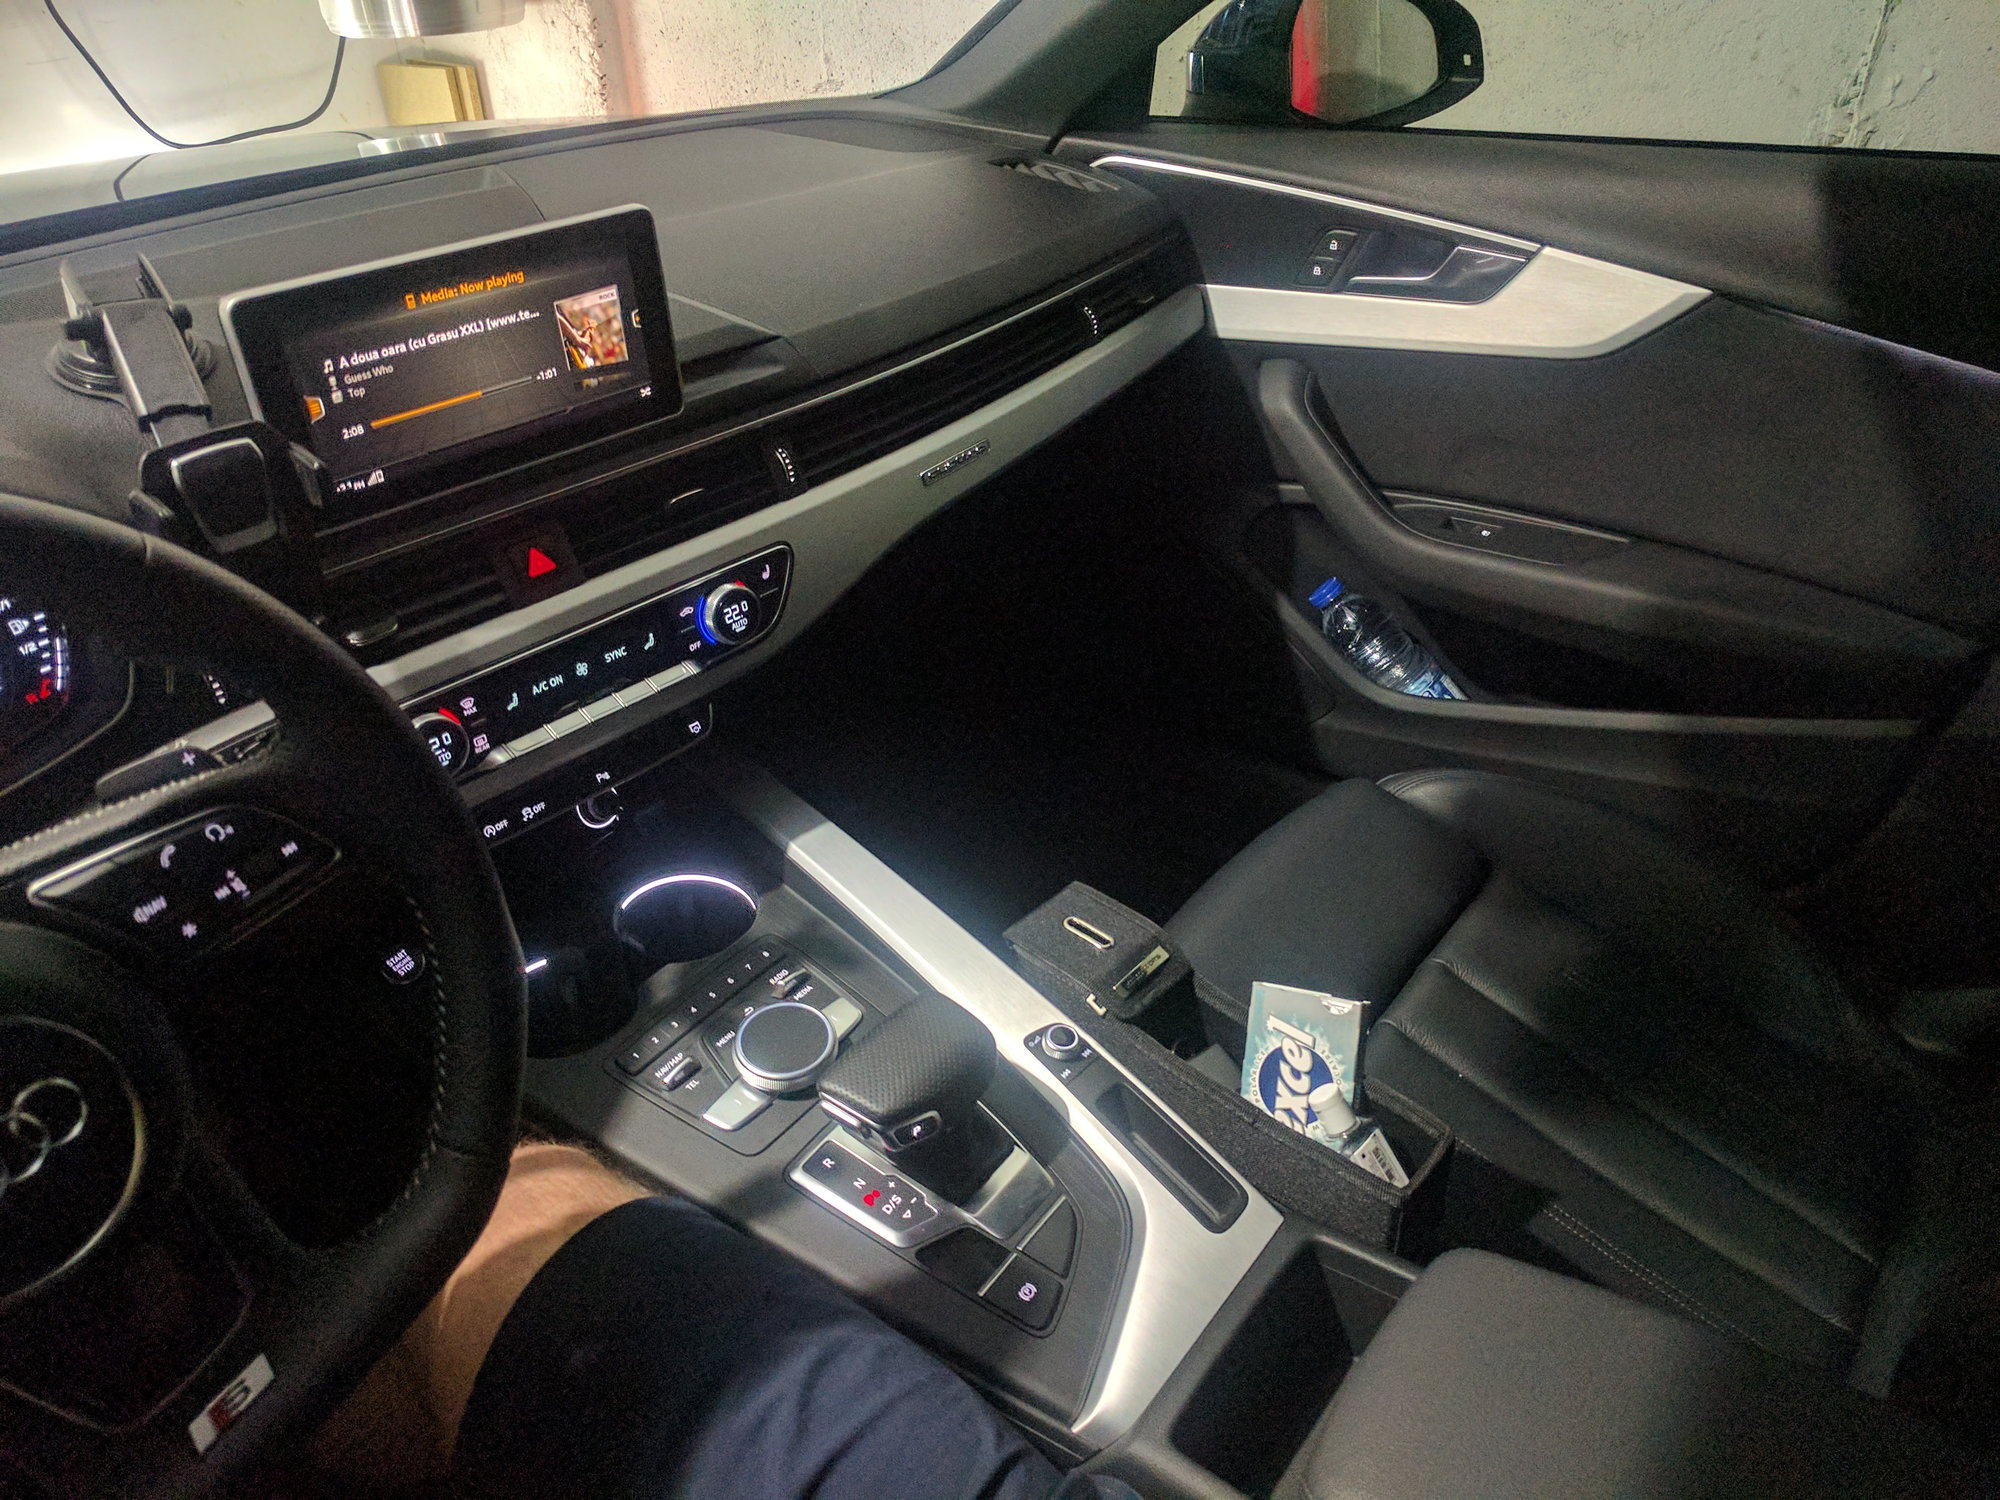 Audi seat gap filler (Sline)  Audi, Car seats, Car seat